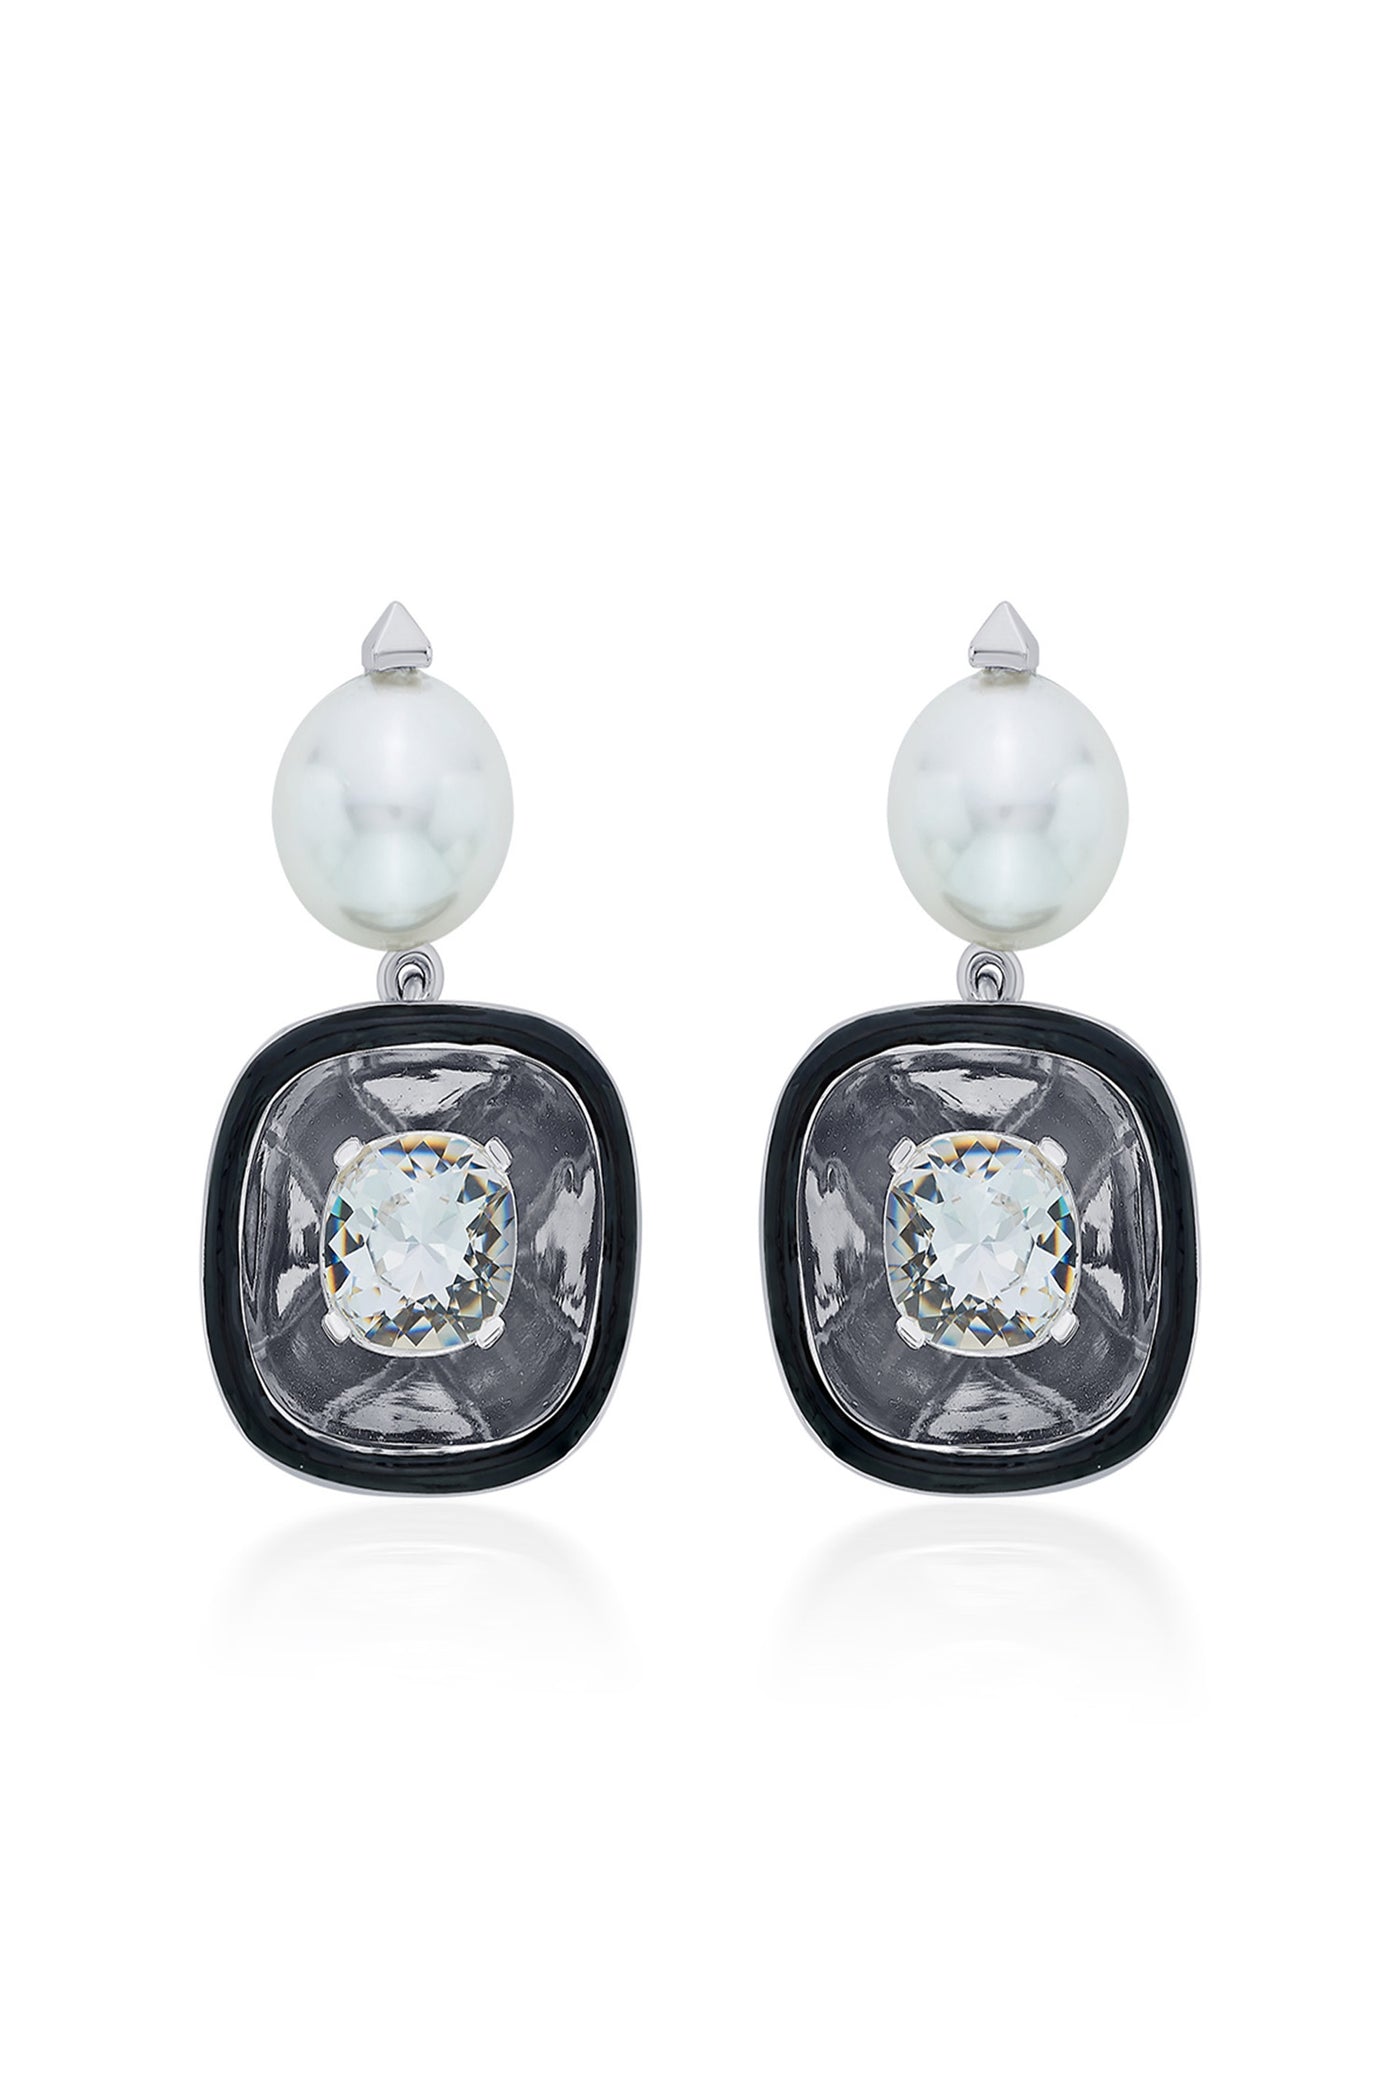 Isharya Bougie Glory Wrap Crystal & Pearl Earrings In Rhodium Plated fashion jewellery online shopping melange singapore indian designer wear